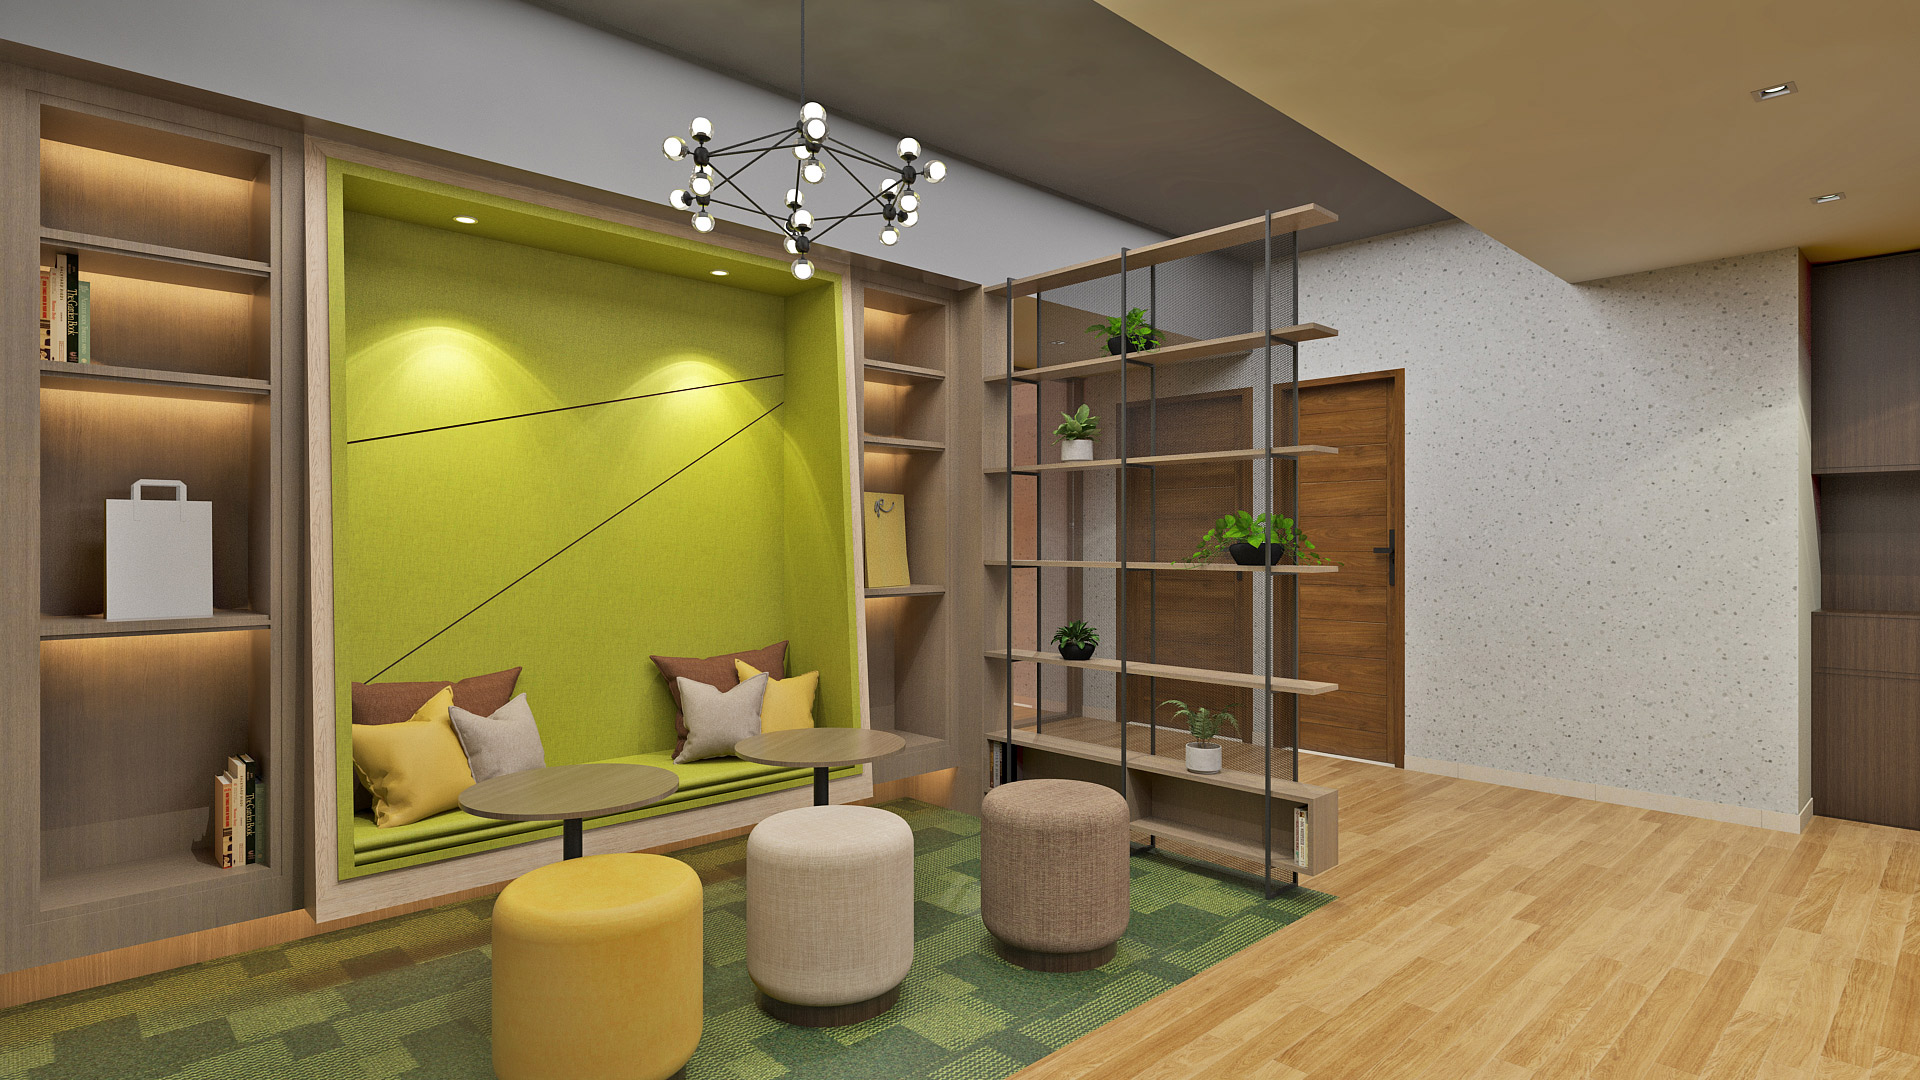 Elegant corporate office interior showcasing ergonomic furniture and collaborative workspace